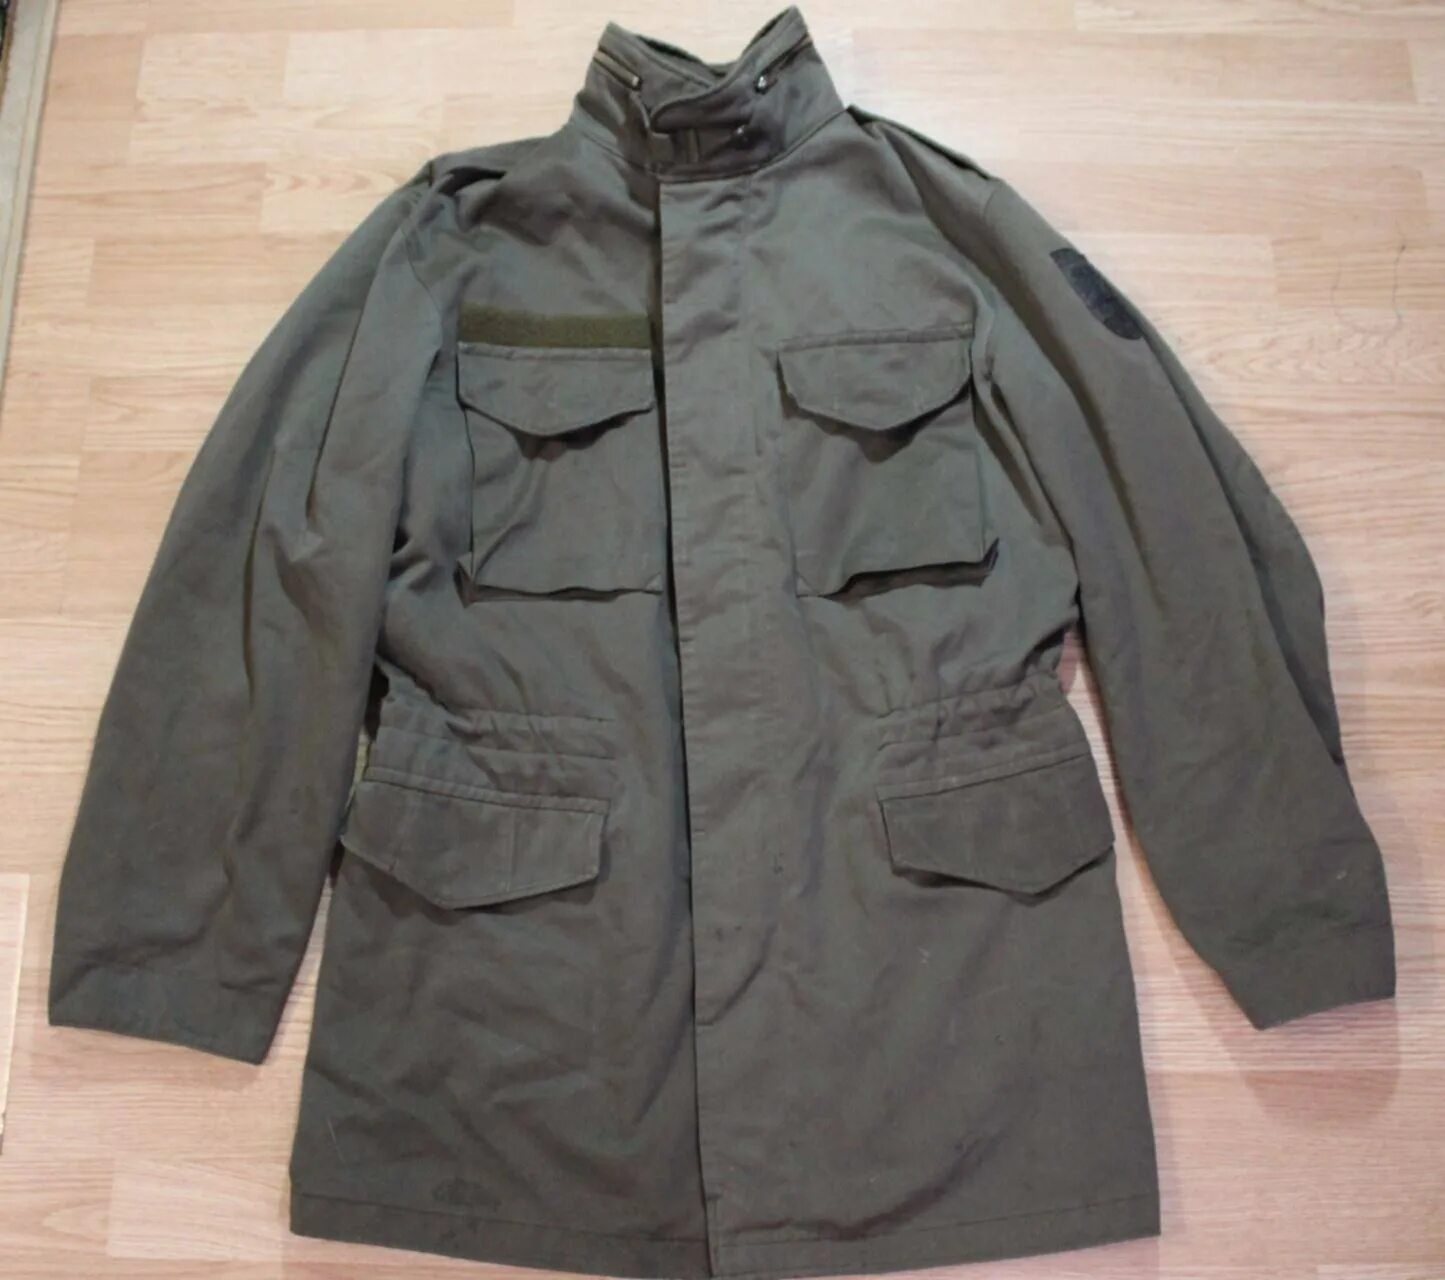 Куртка м65 Австрия. Армейская куртка м65. Куртка НАТО М-65. Куртка армии Австрии м65 Gore-Tex.